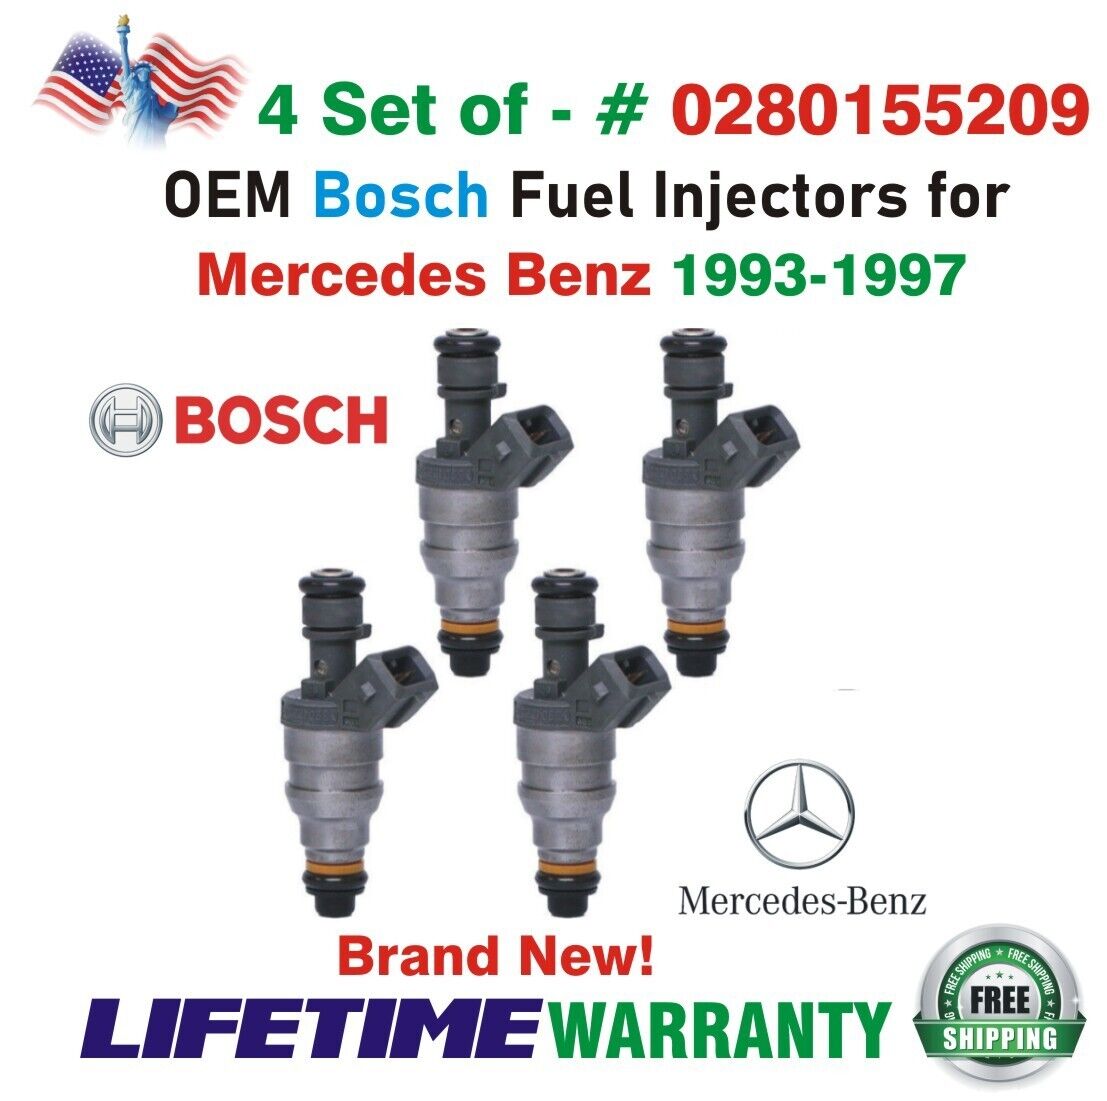 Bosch Genuine x4 Best Upgrade Fuel Injectors for 1993-1997 Mercedes Benz I4 & I6